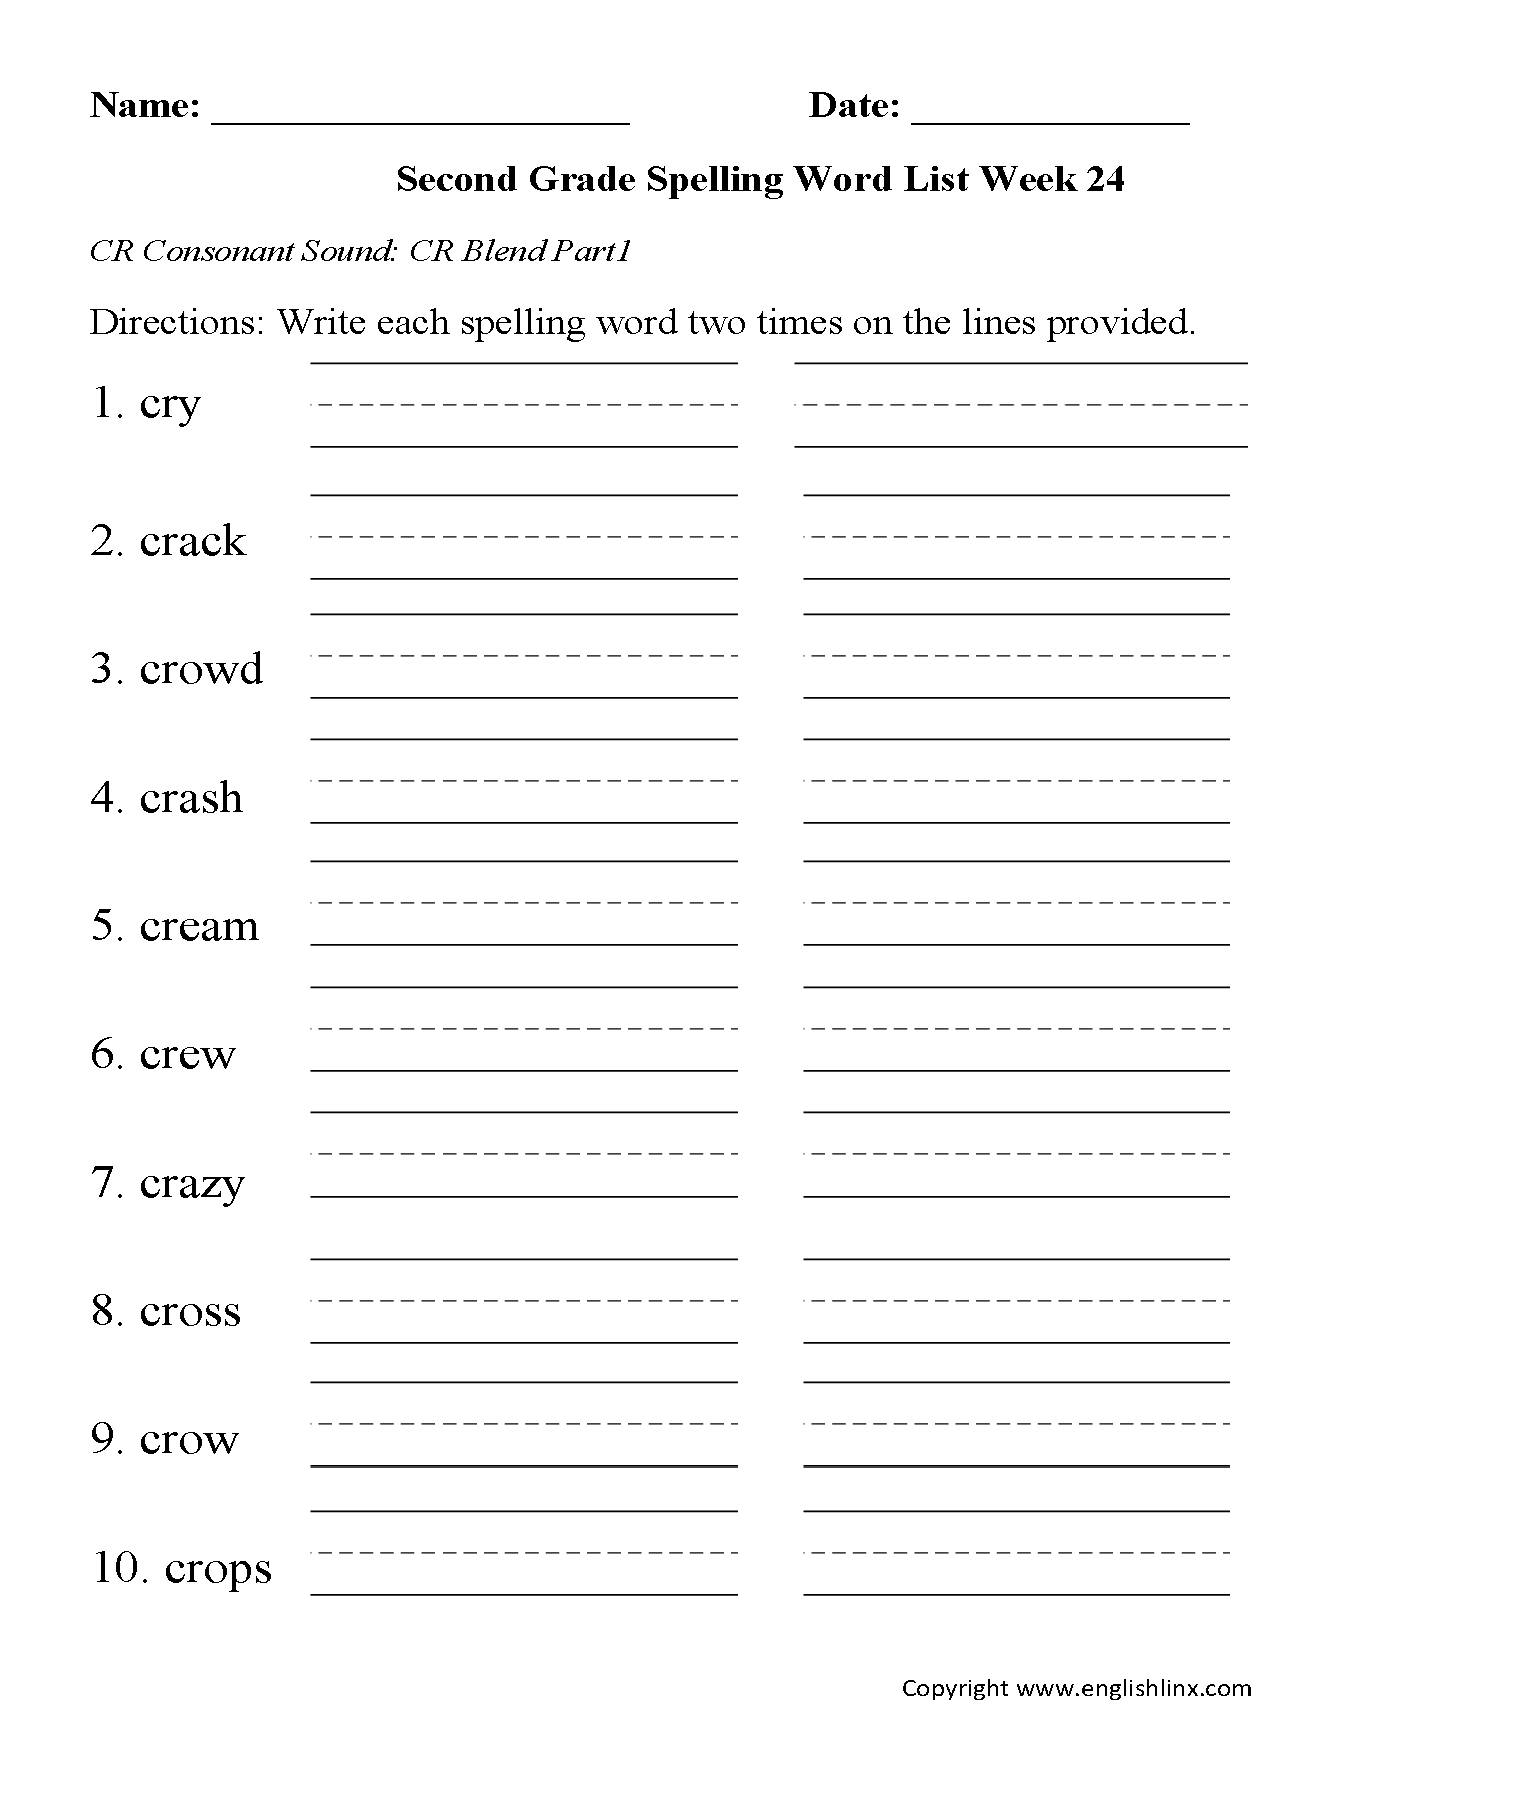 Spelling Worksheets | Second Grade Spelling Words Worksheets